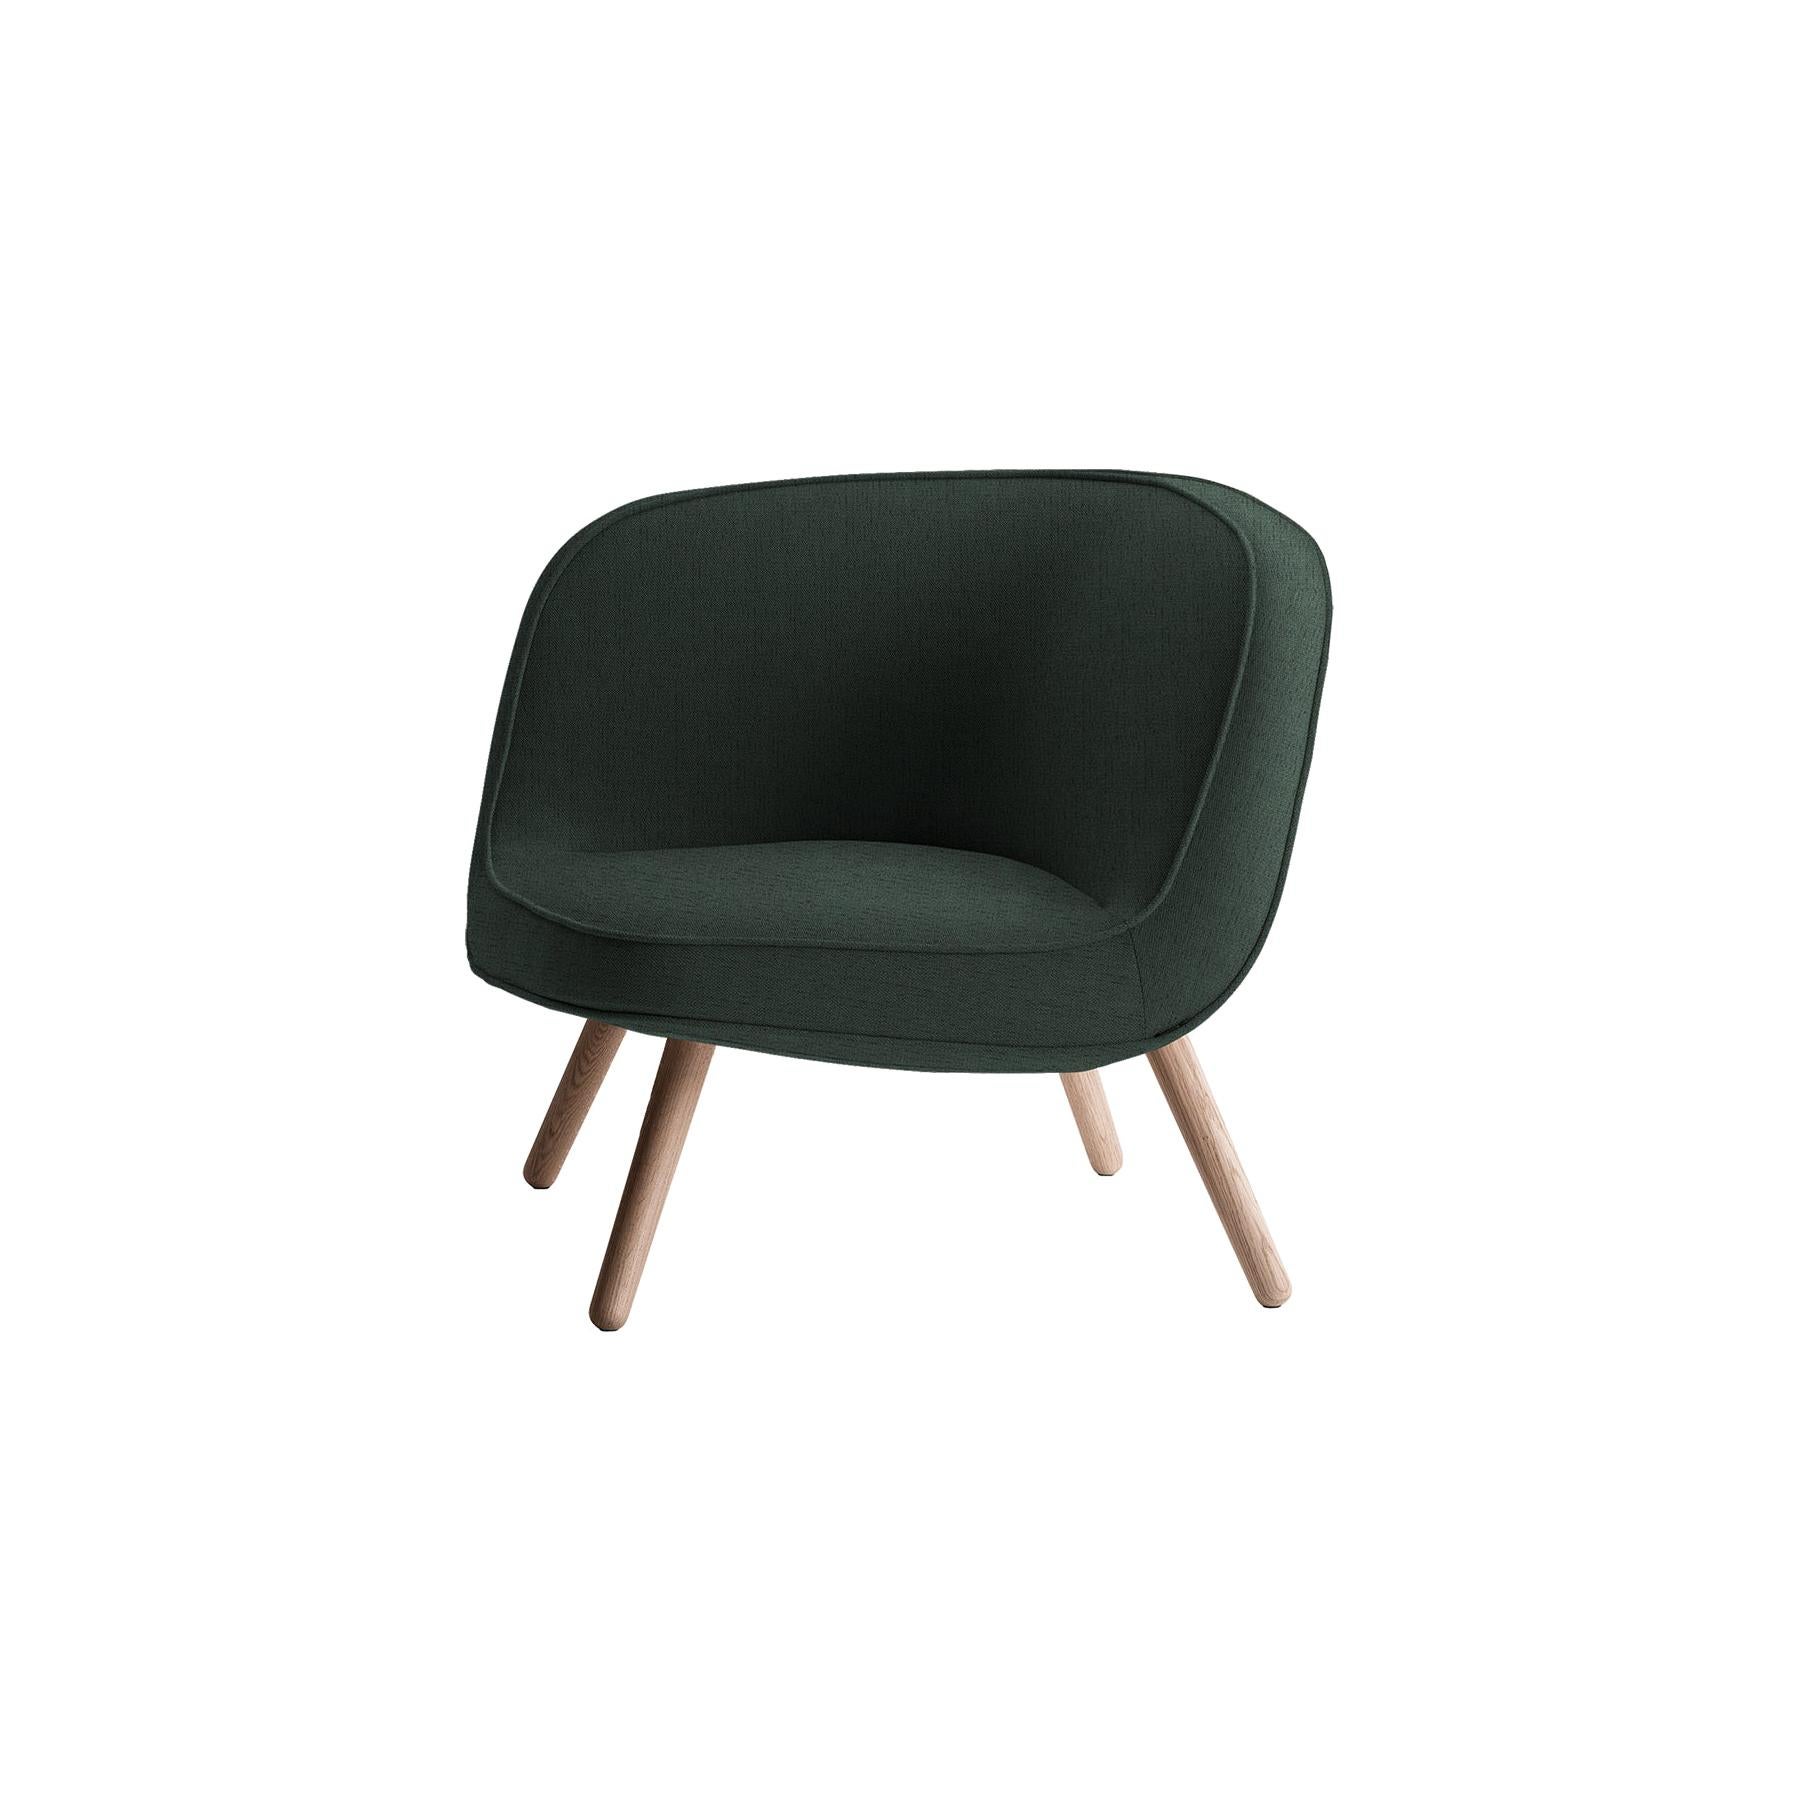 KiBiSi Lounge Chairs